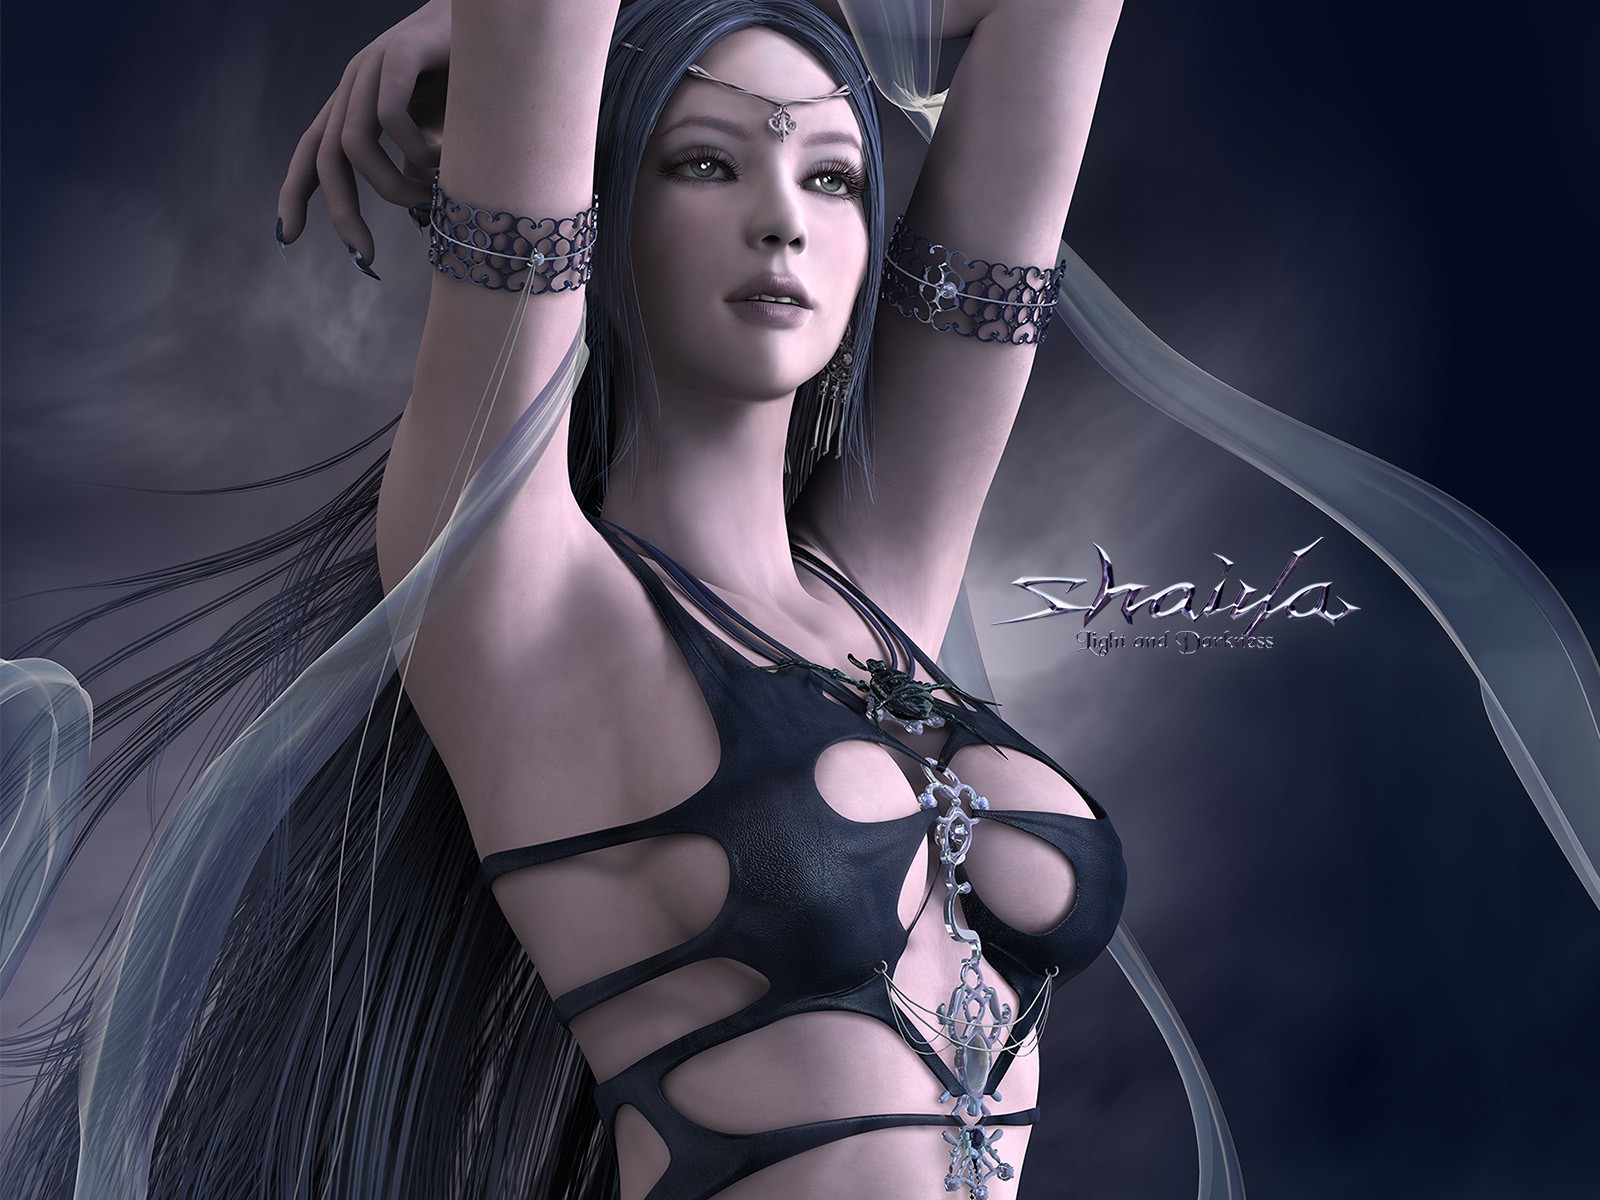 General 1600x1200 Shaiya arms up boobs big boobs fantasy art fantasy girl women digital art